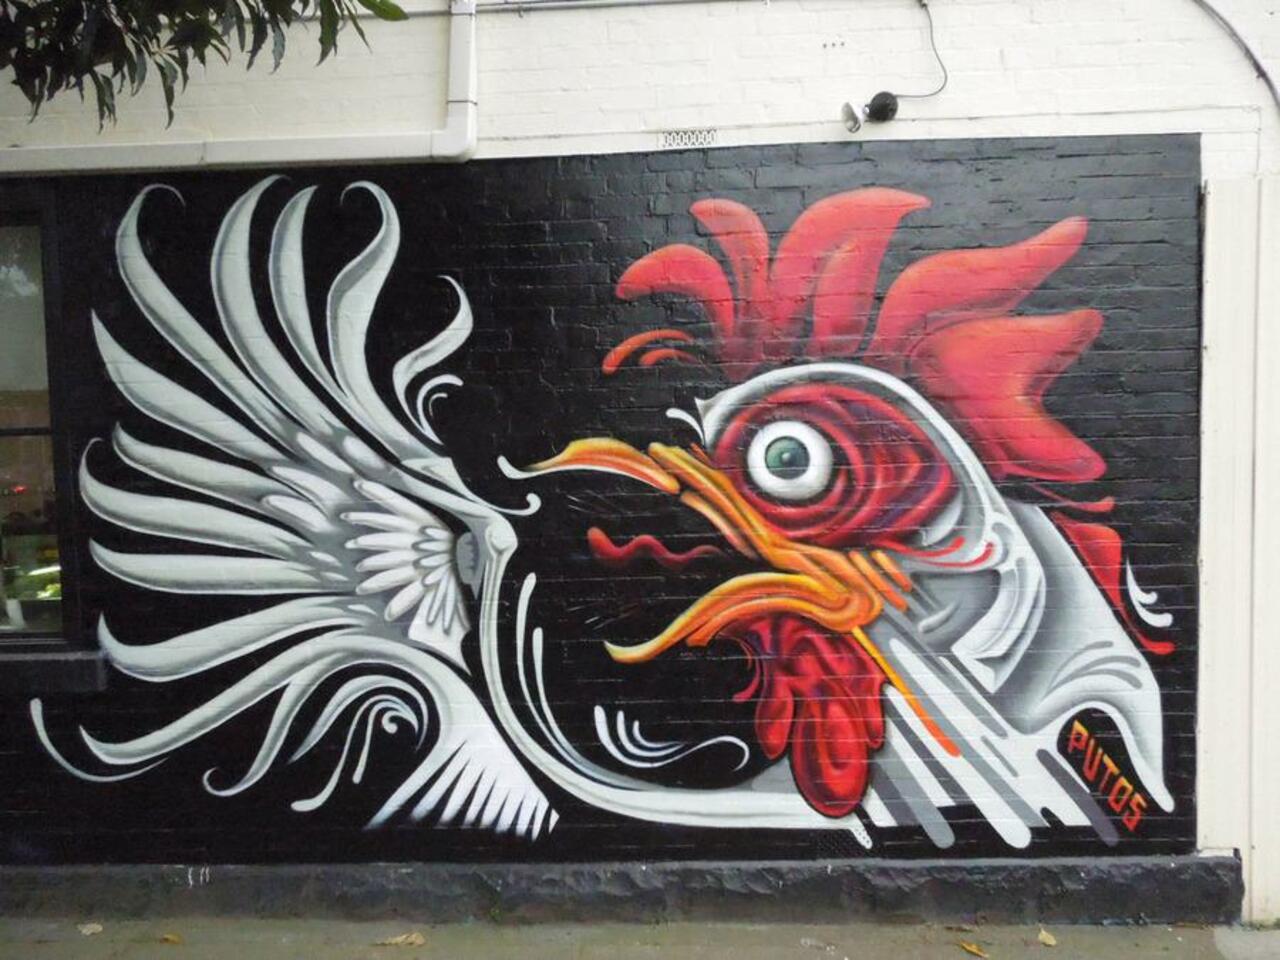 Streetart by Putos in Australia (http://globalstreetart.com/putospaint )

#streetart #urbanart #mural #art #graffiti http://t.co/j1Ofi3PwBd